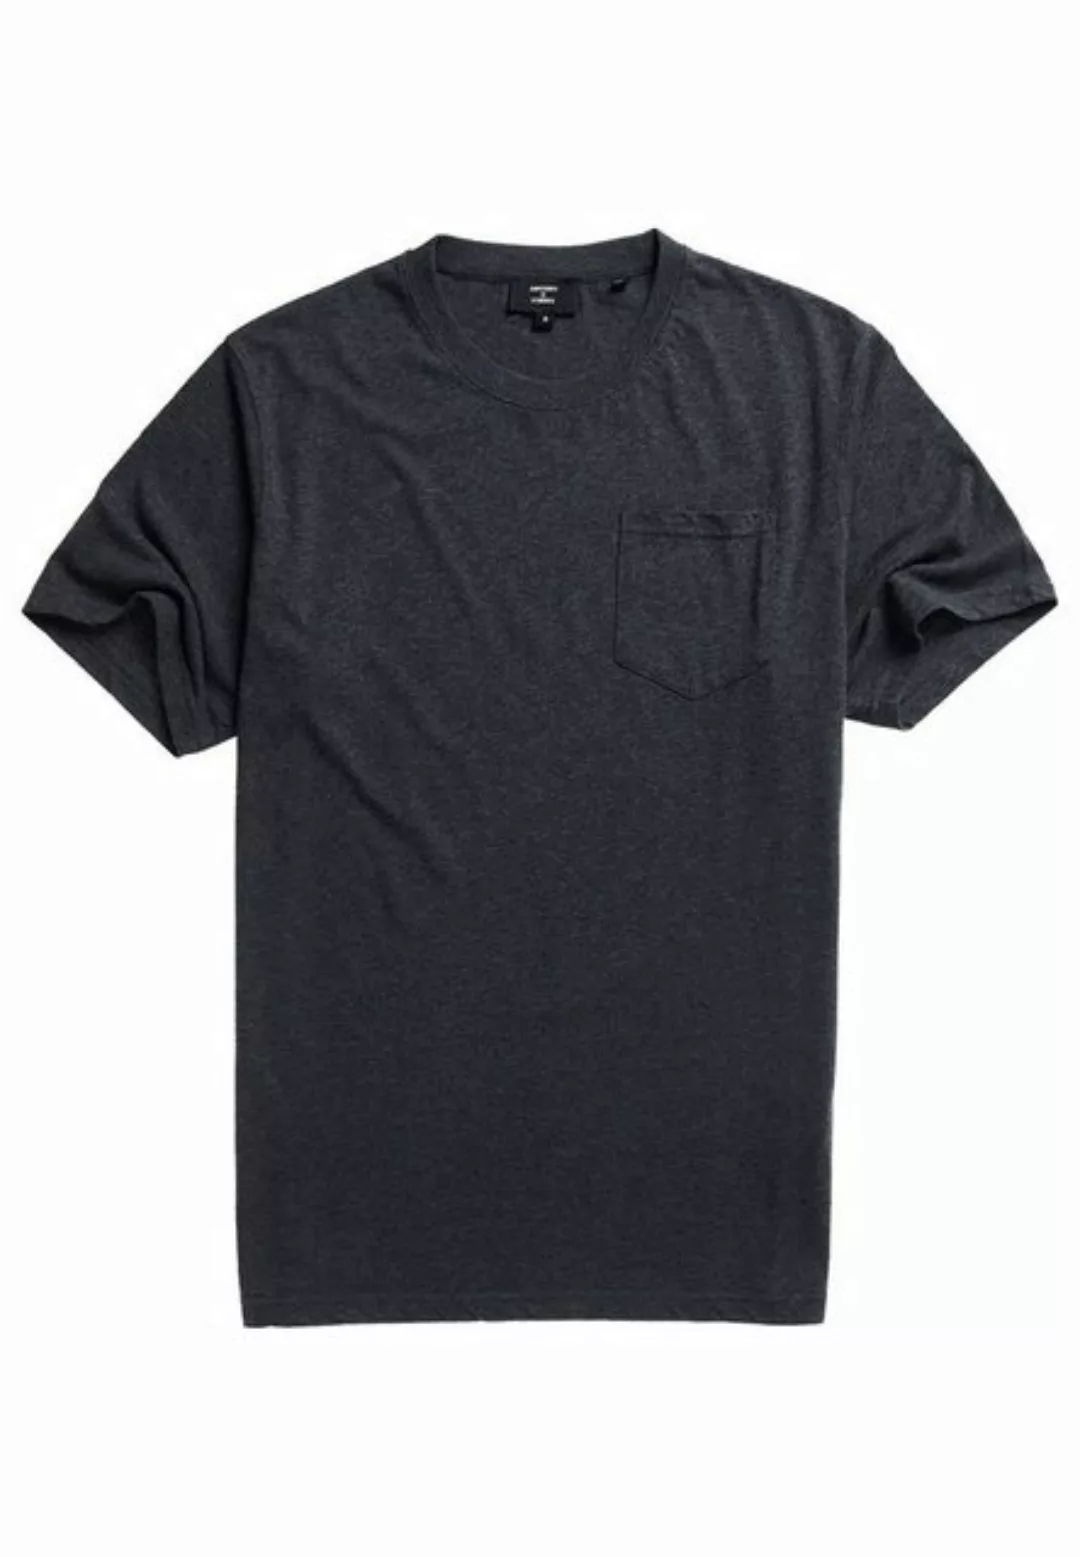 Superdry Authentic Cotton Kurzarm T-shirt 2XL Charcoal Marl günstig online kaufen